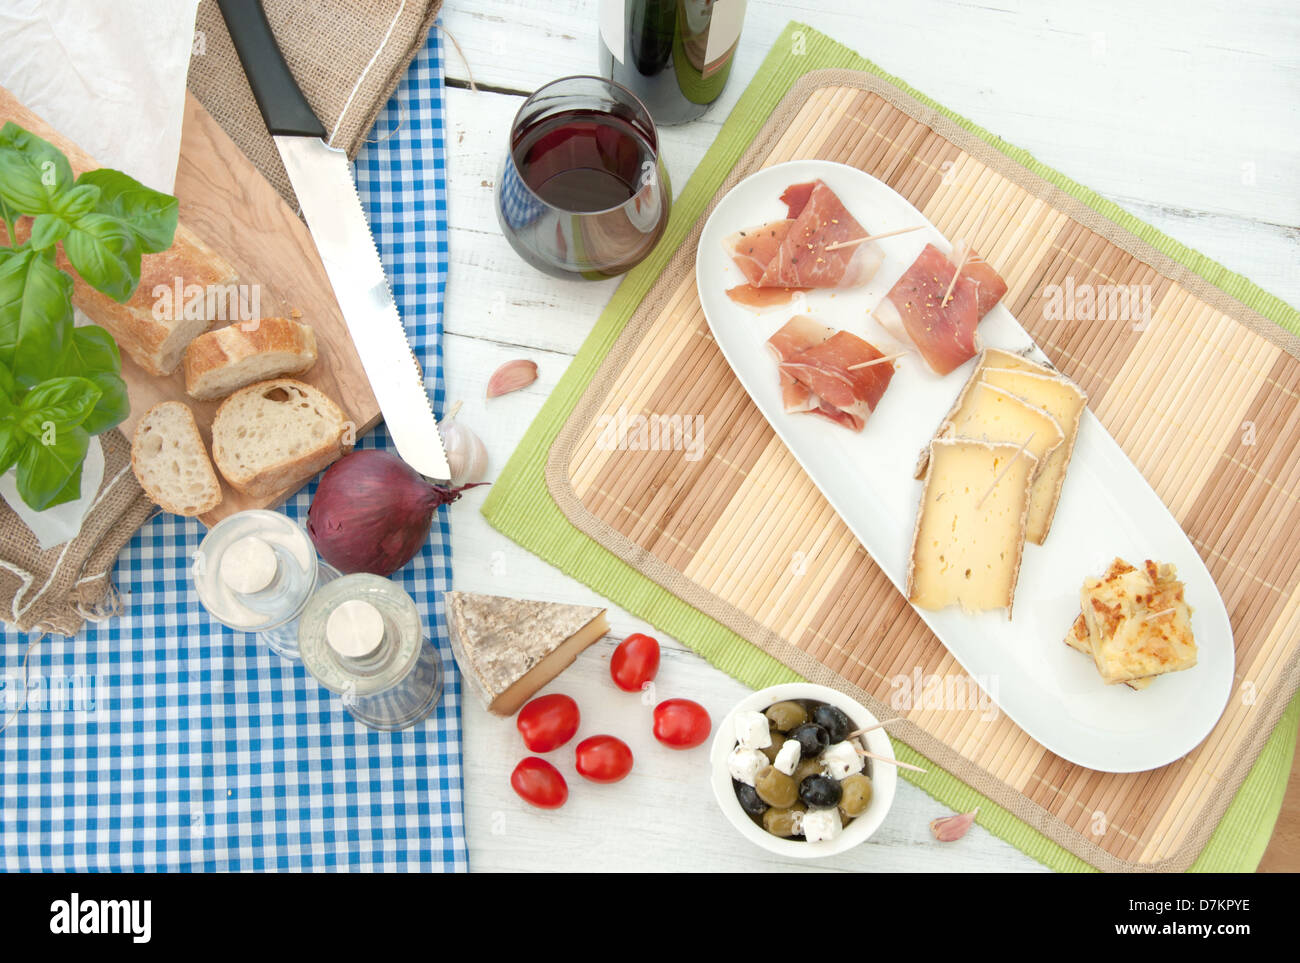 Spanish food snacks consisting of potato omelette, cheese and serrano ham Stock Photo